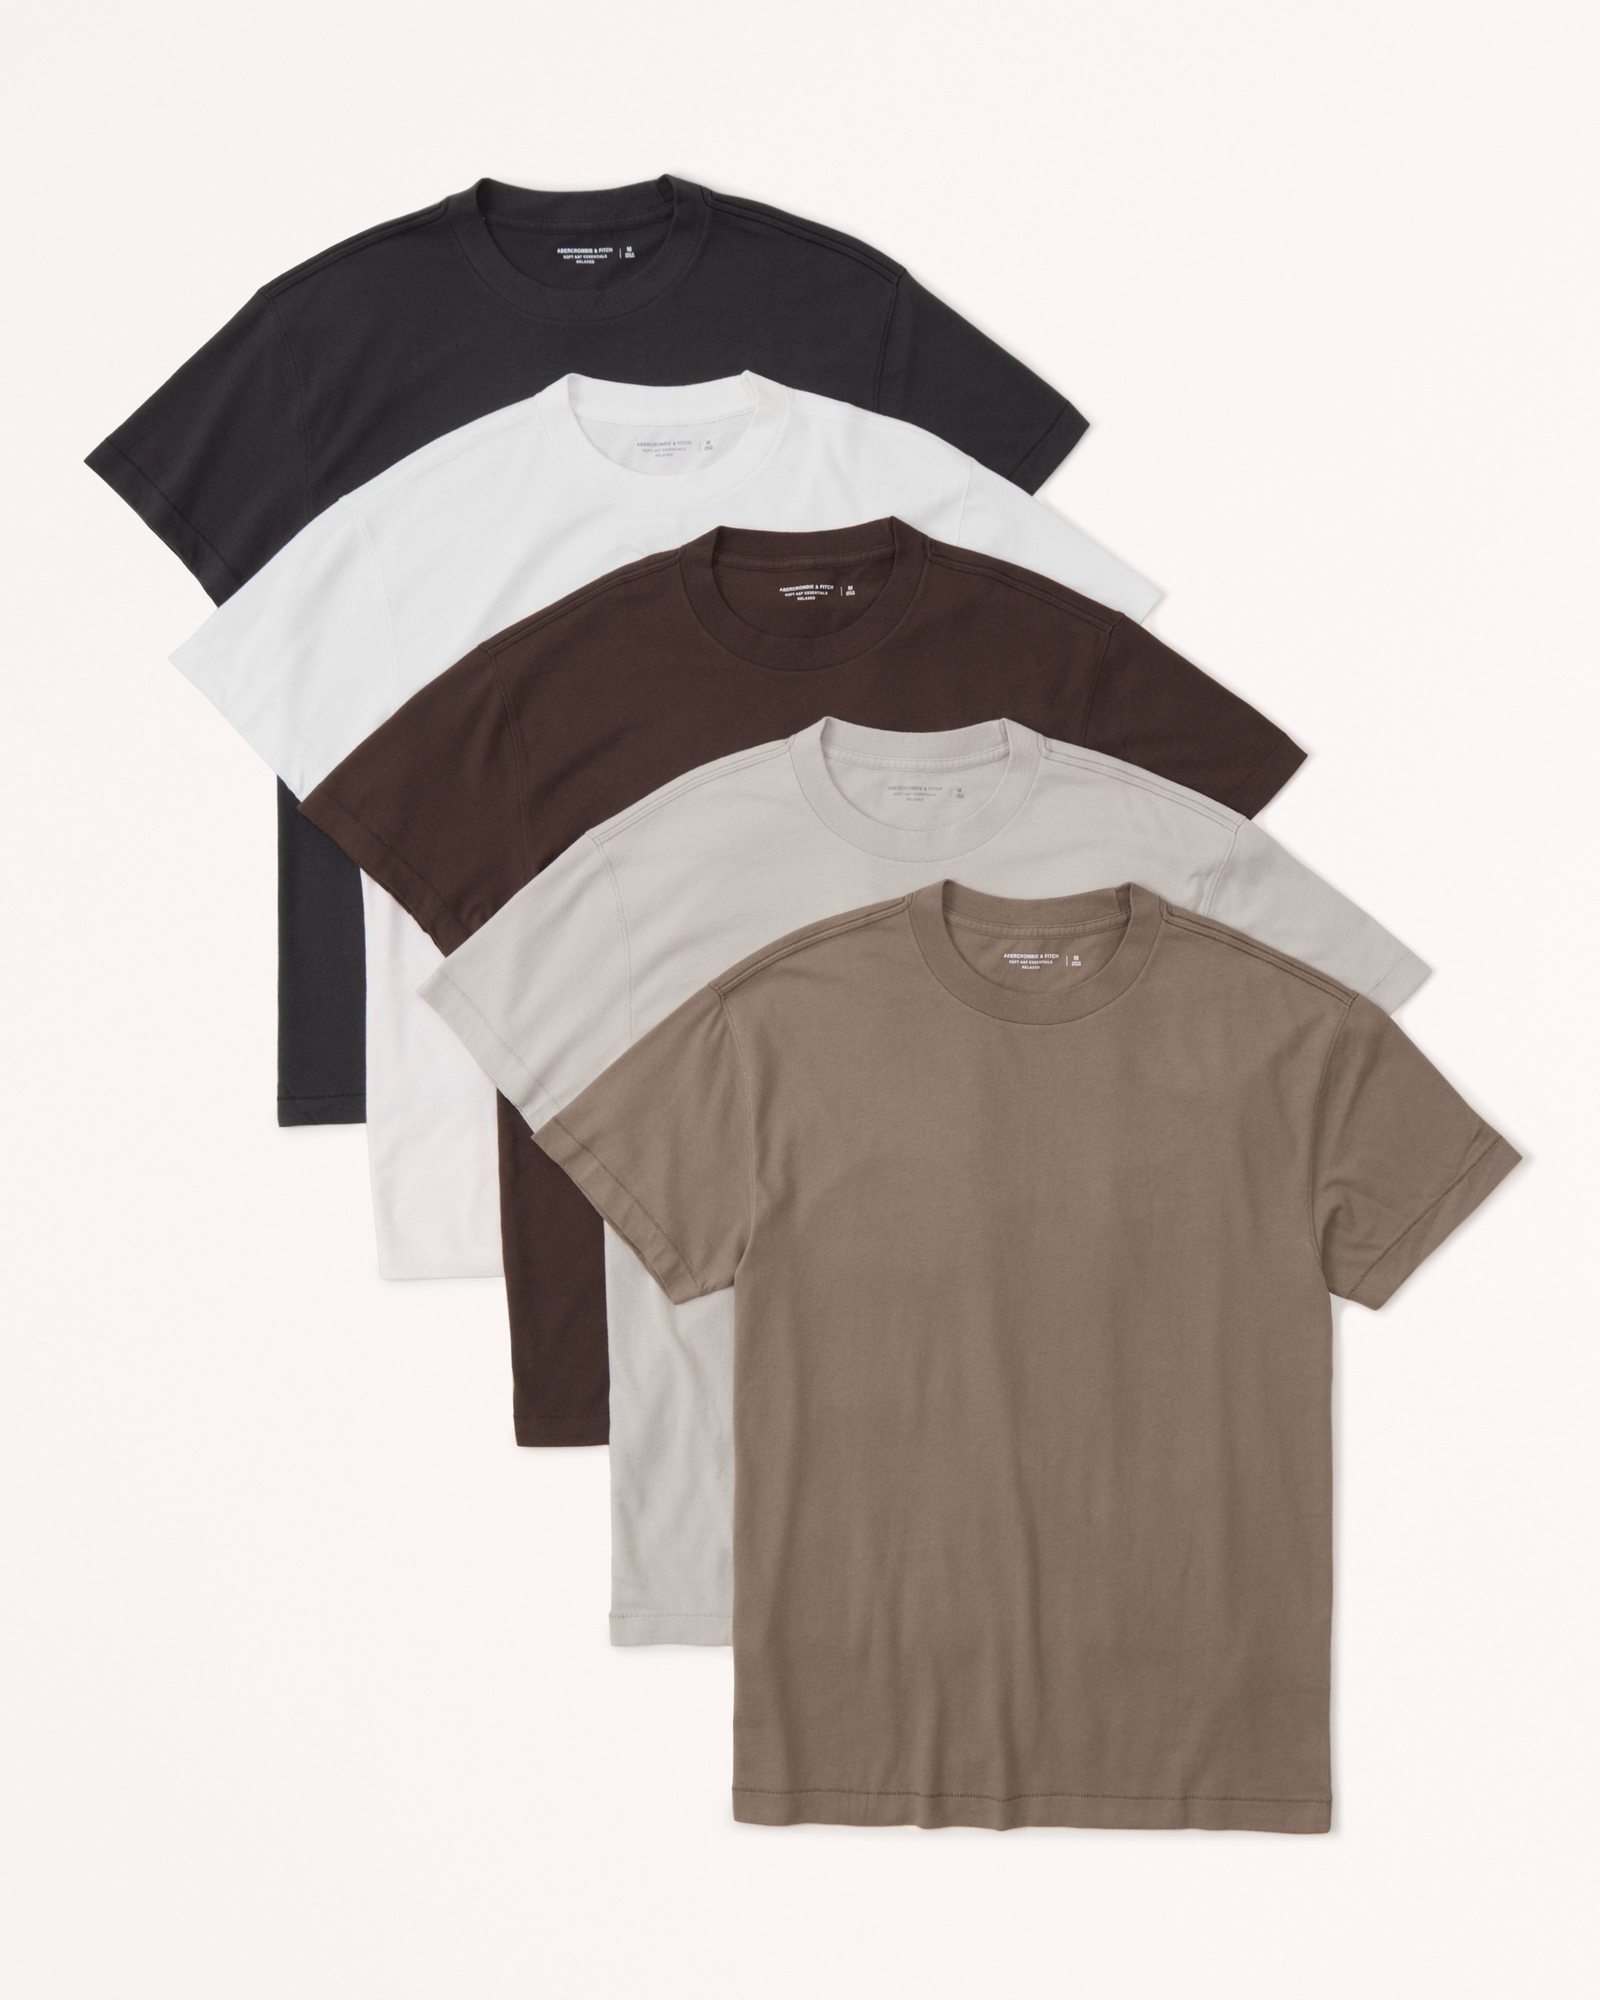 Hollister Men's Short Sleeve Crew Neck Must-Have Tee Logo T-Shirt